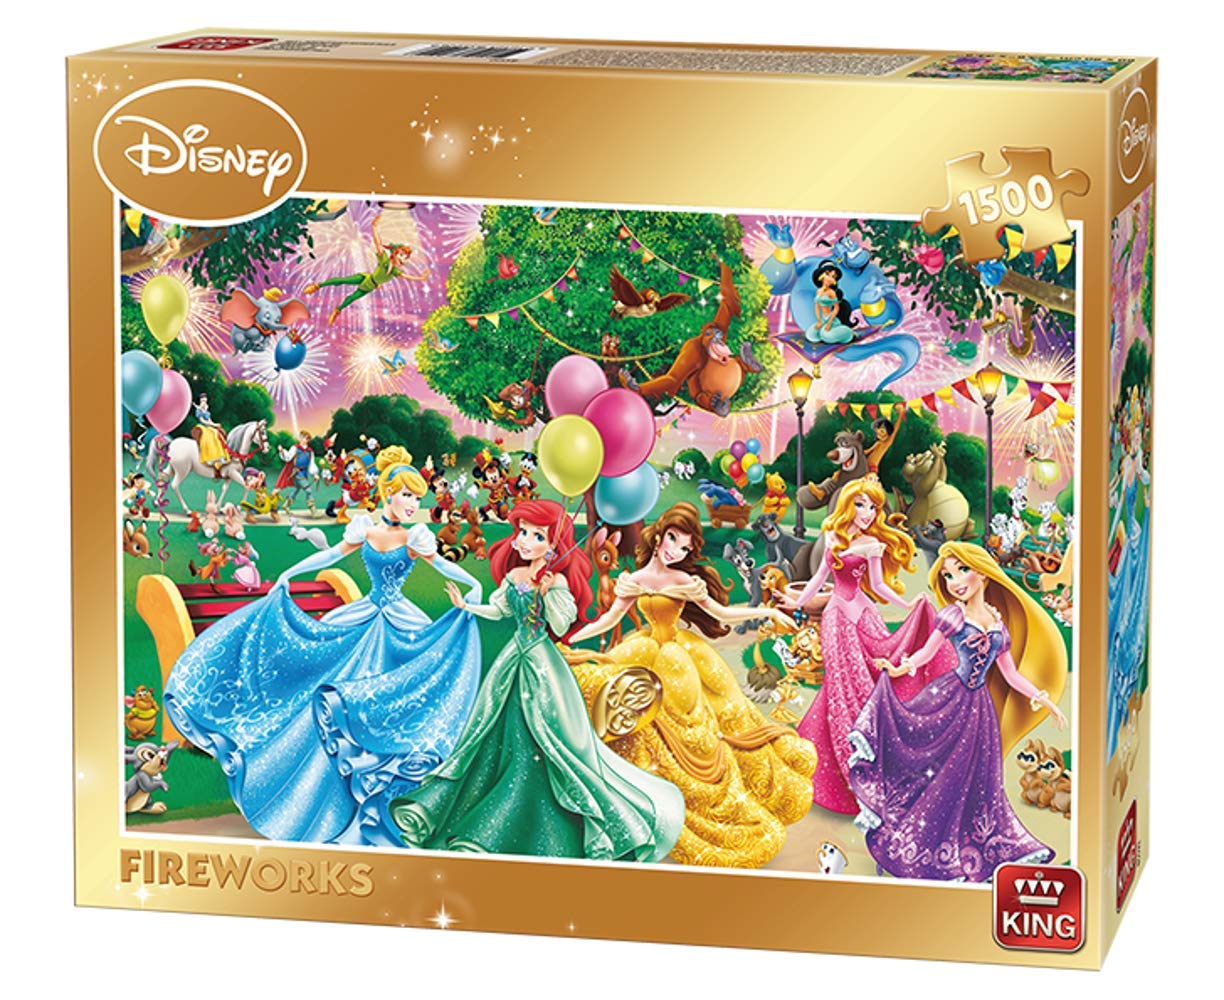 King Disney Puzzle 1500 Pcs 85522 Fireworks